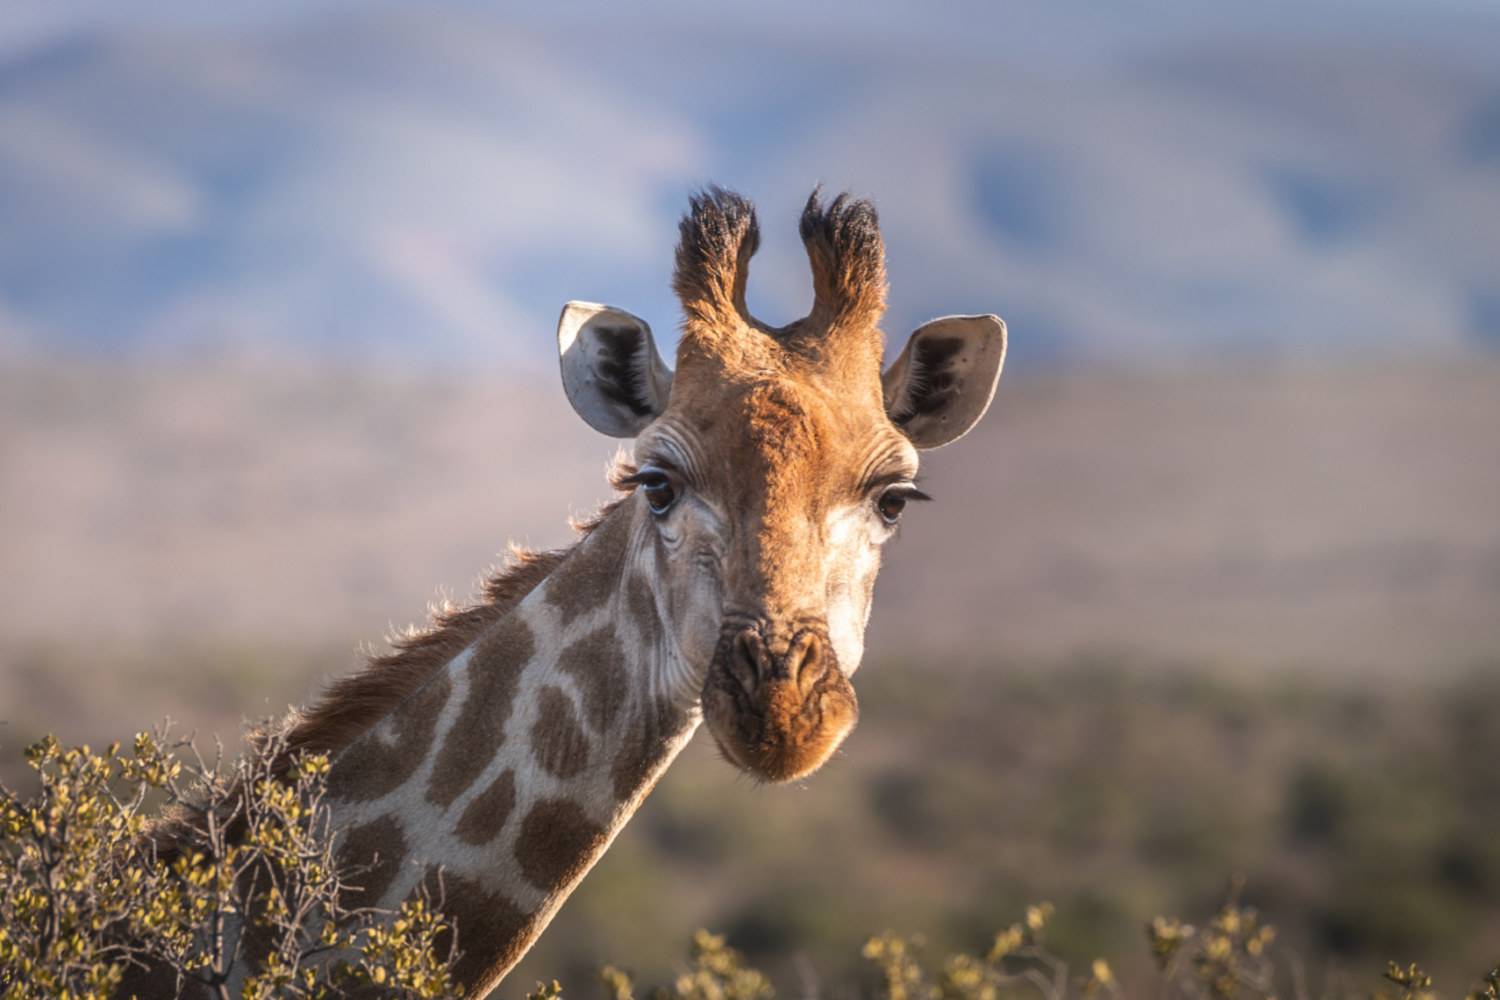 Close-up of a safari giraffe